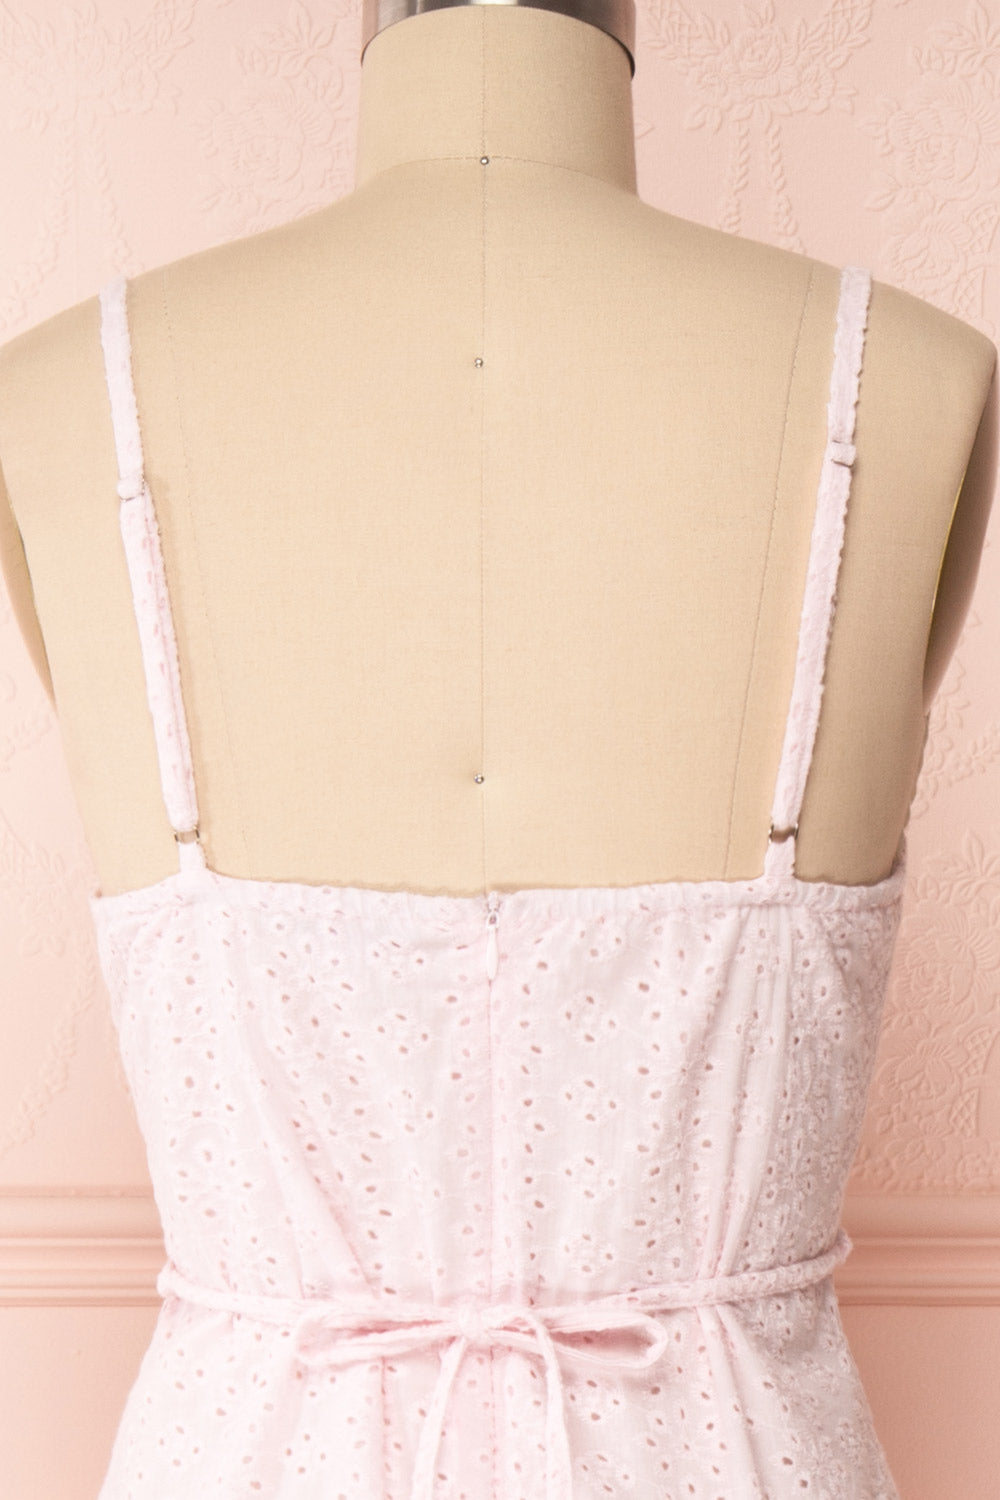 Vidia Peony Light Pink Openwork Short Dress | Boutique 1861 back close up